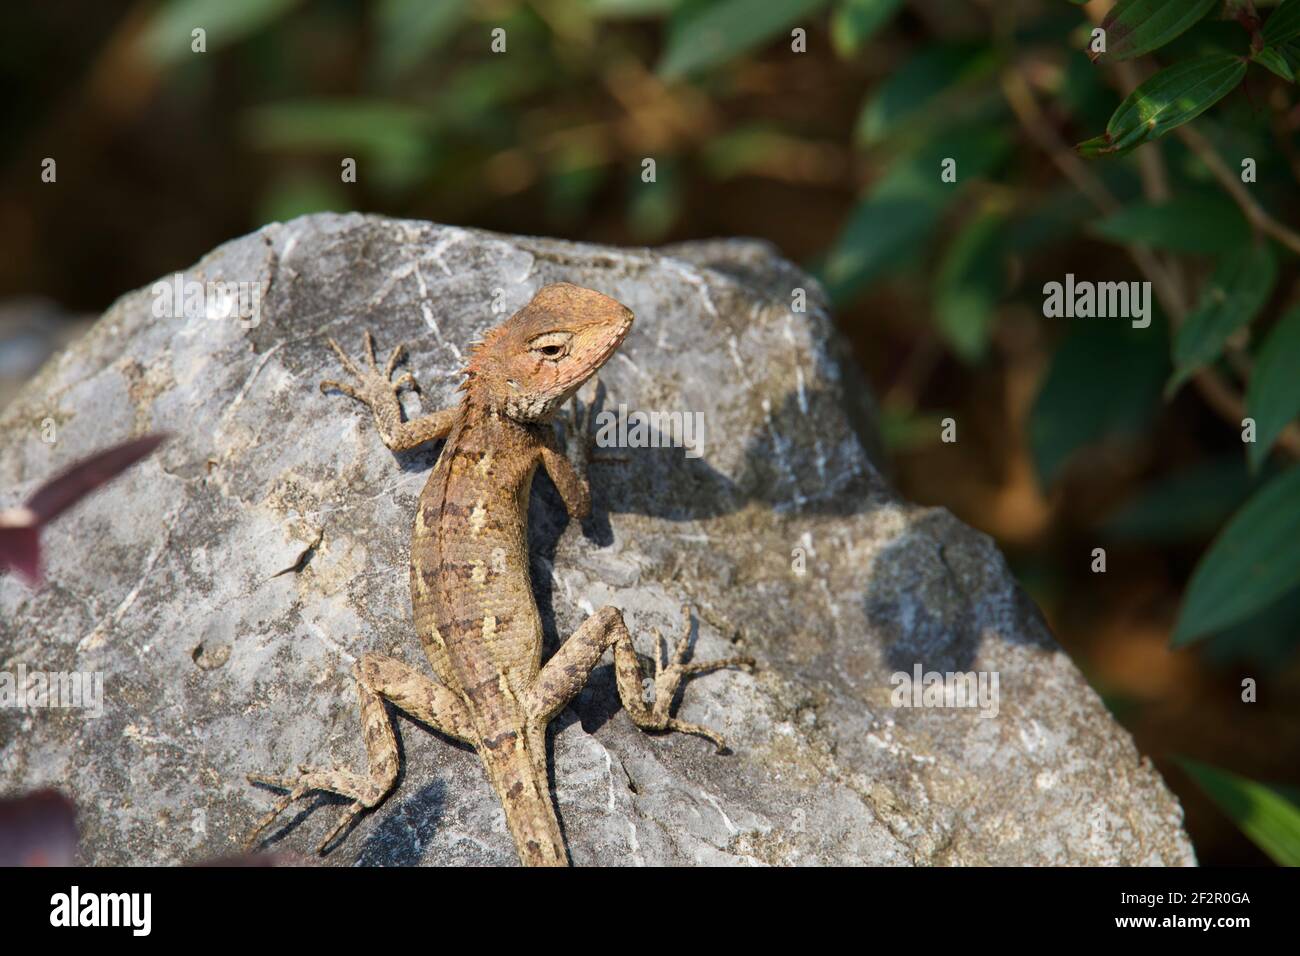 Lizard in the rock nature garden park Stock Photo